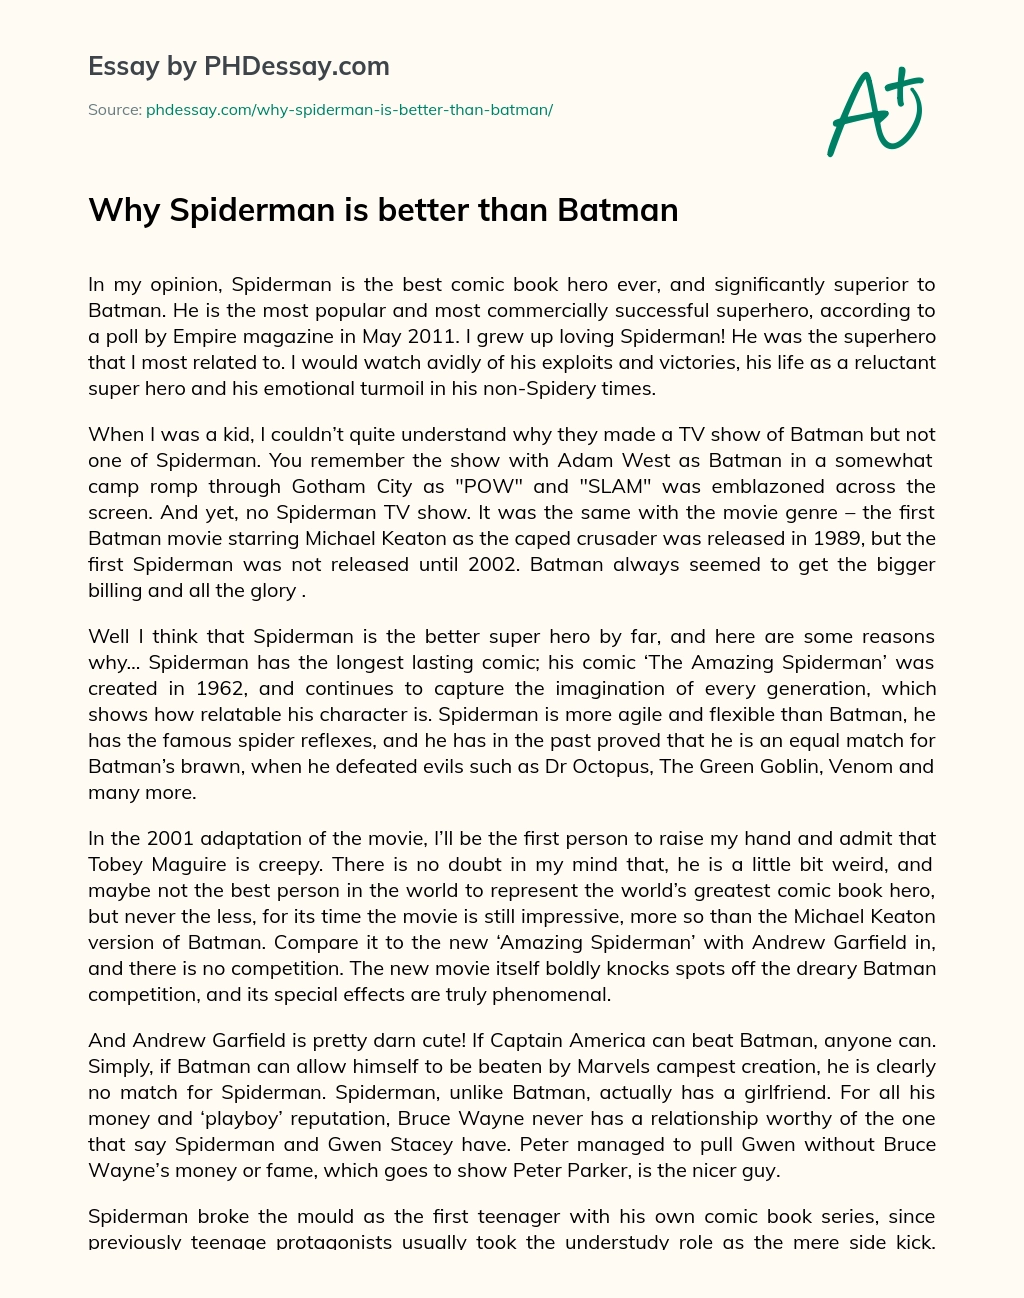 ﻿Why Spiderman is better than Batman essay